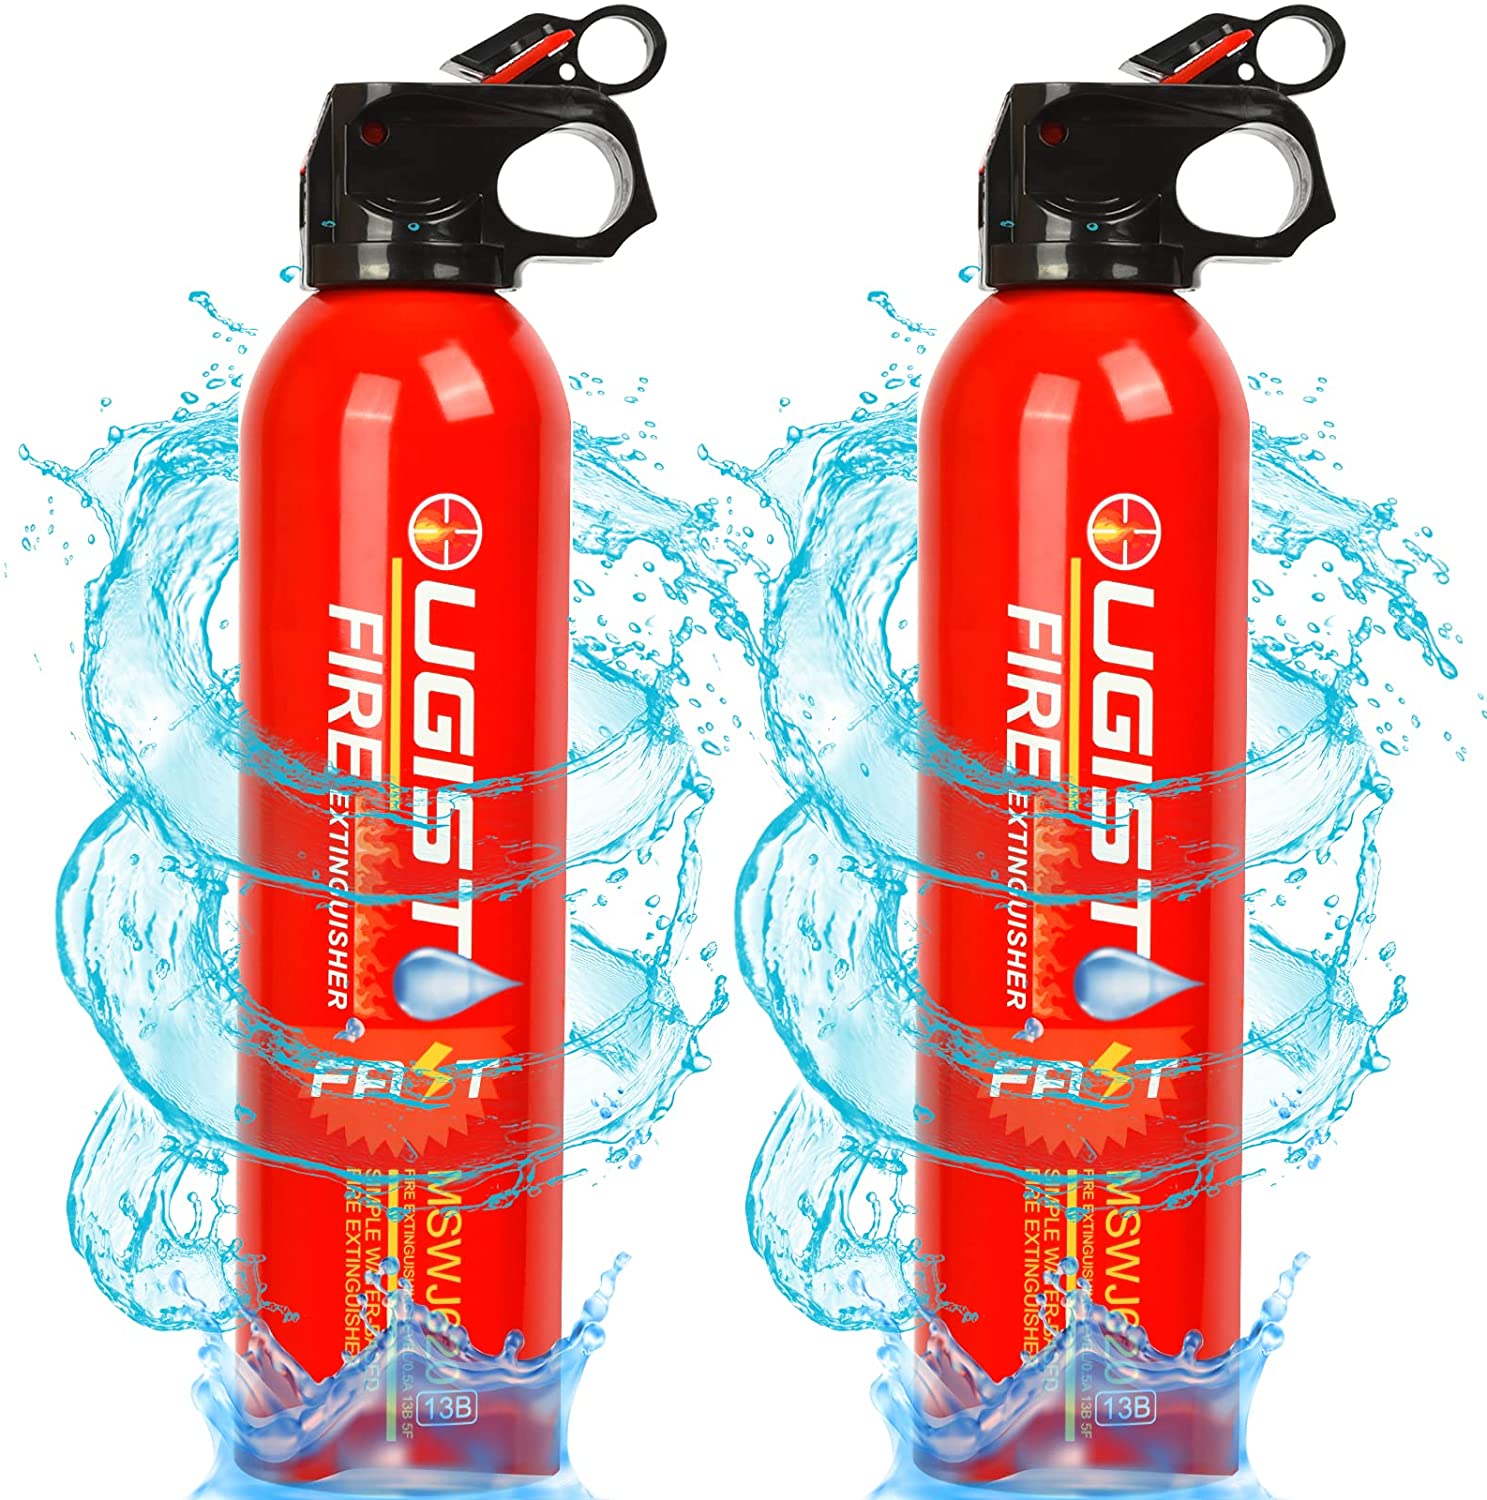 Ougist Anti-Slip Design Compact Fire Extinguishers, 2-Pack